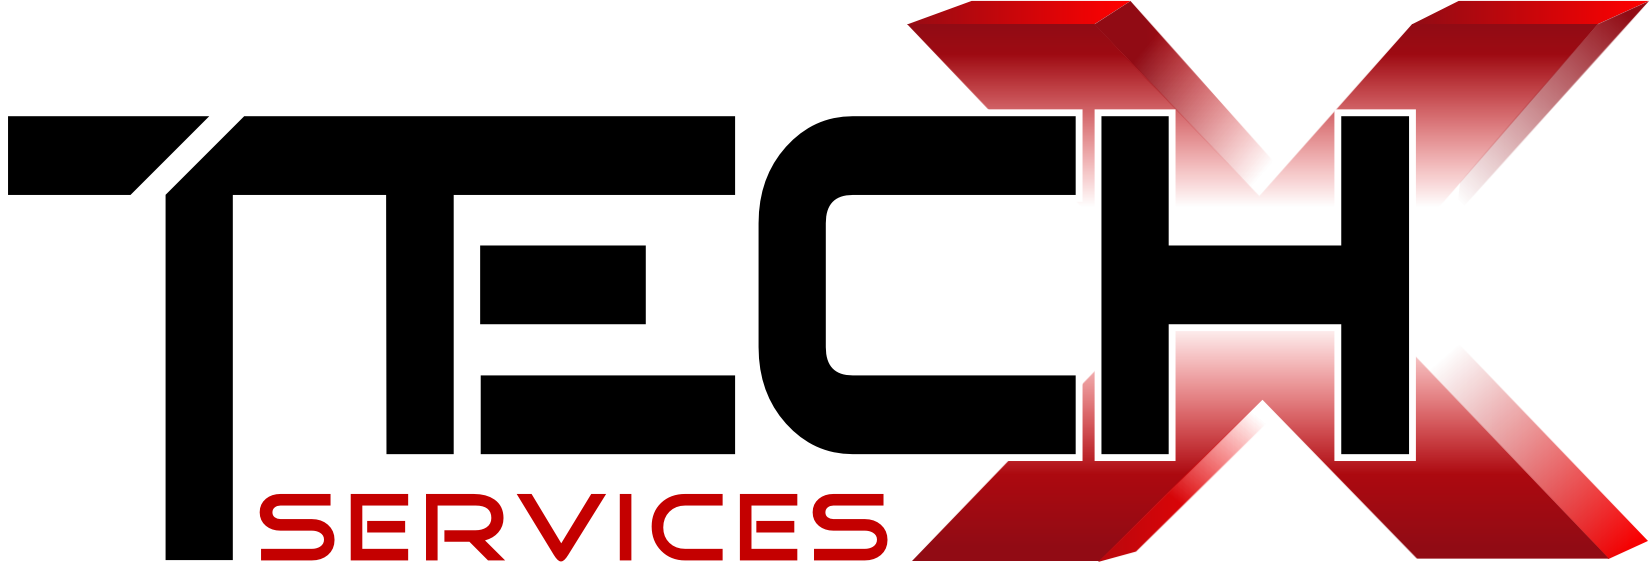 Techx Services